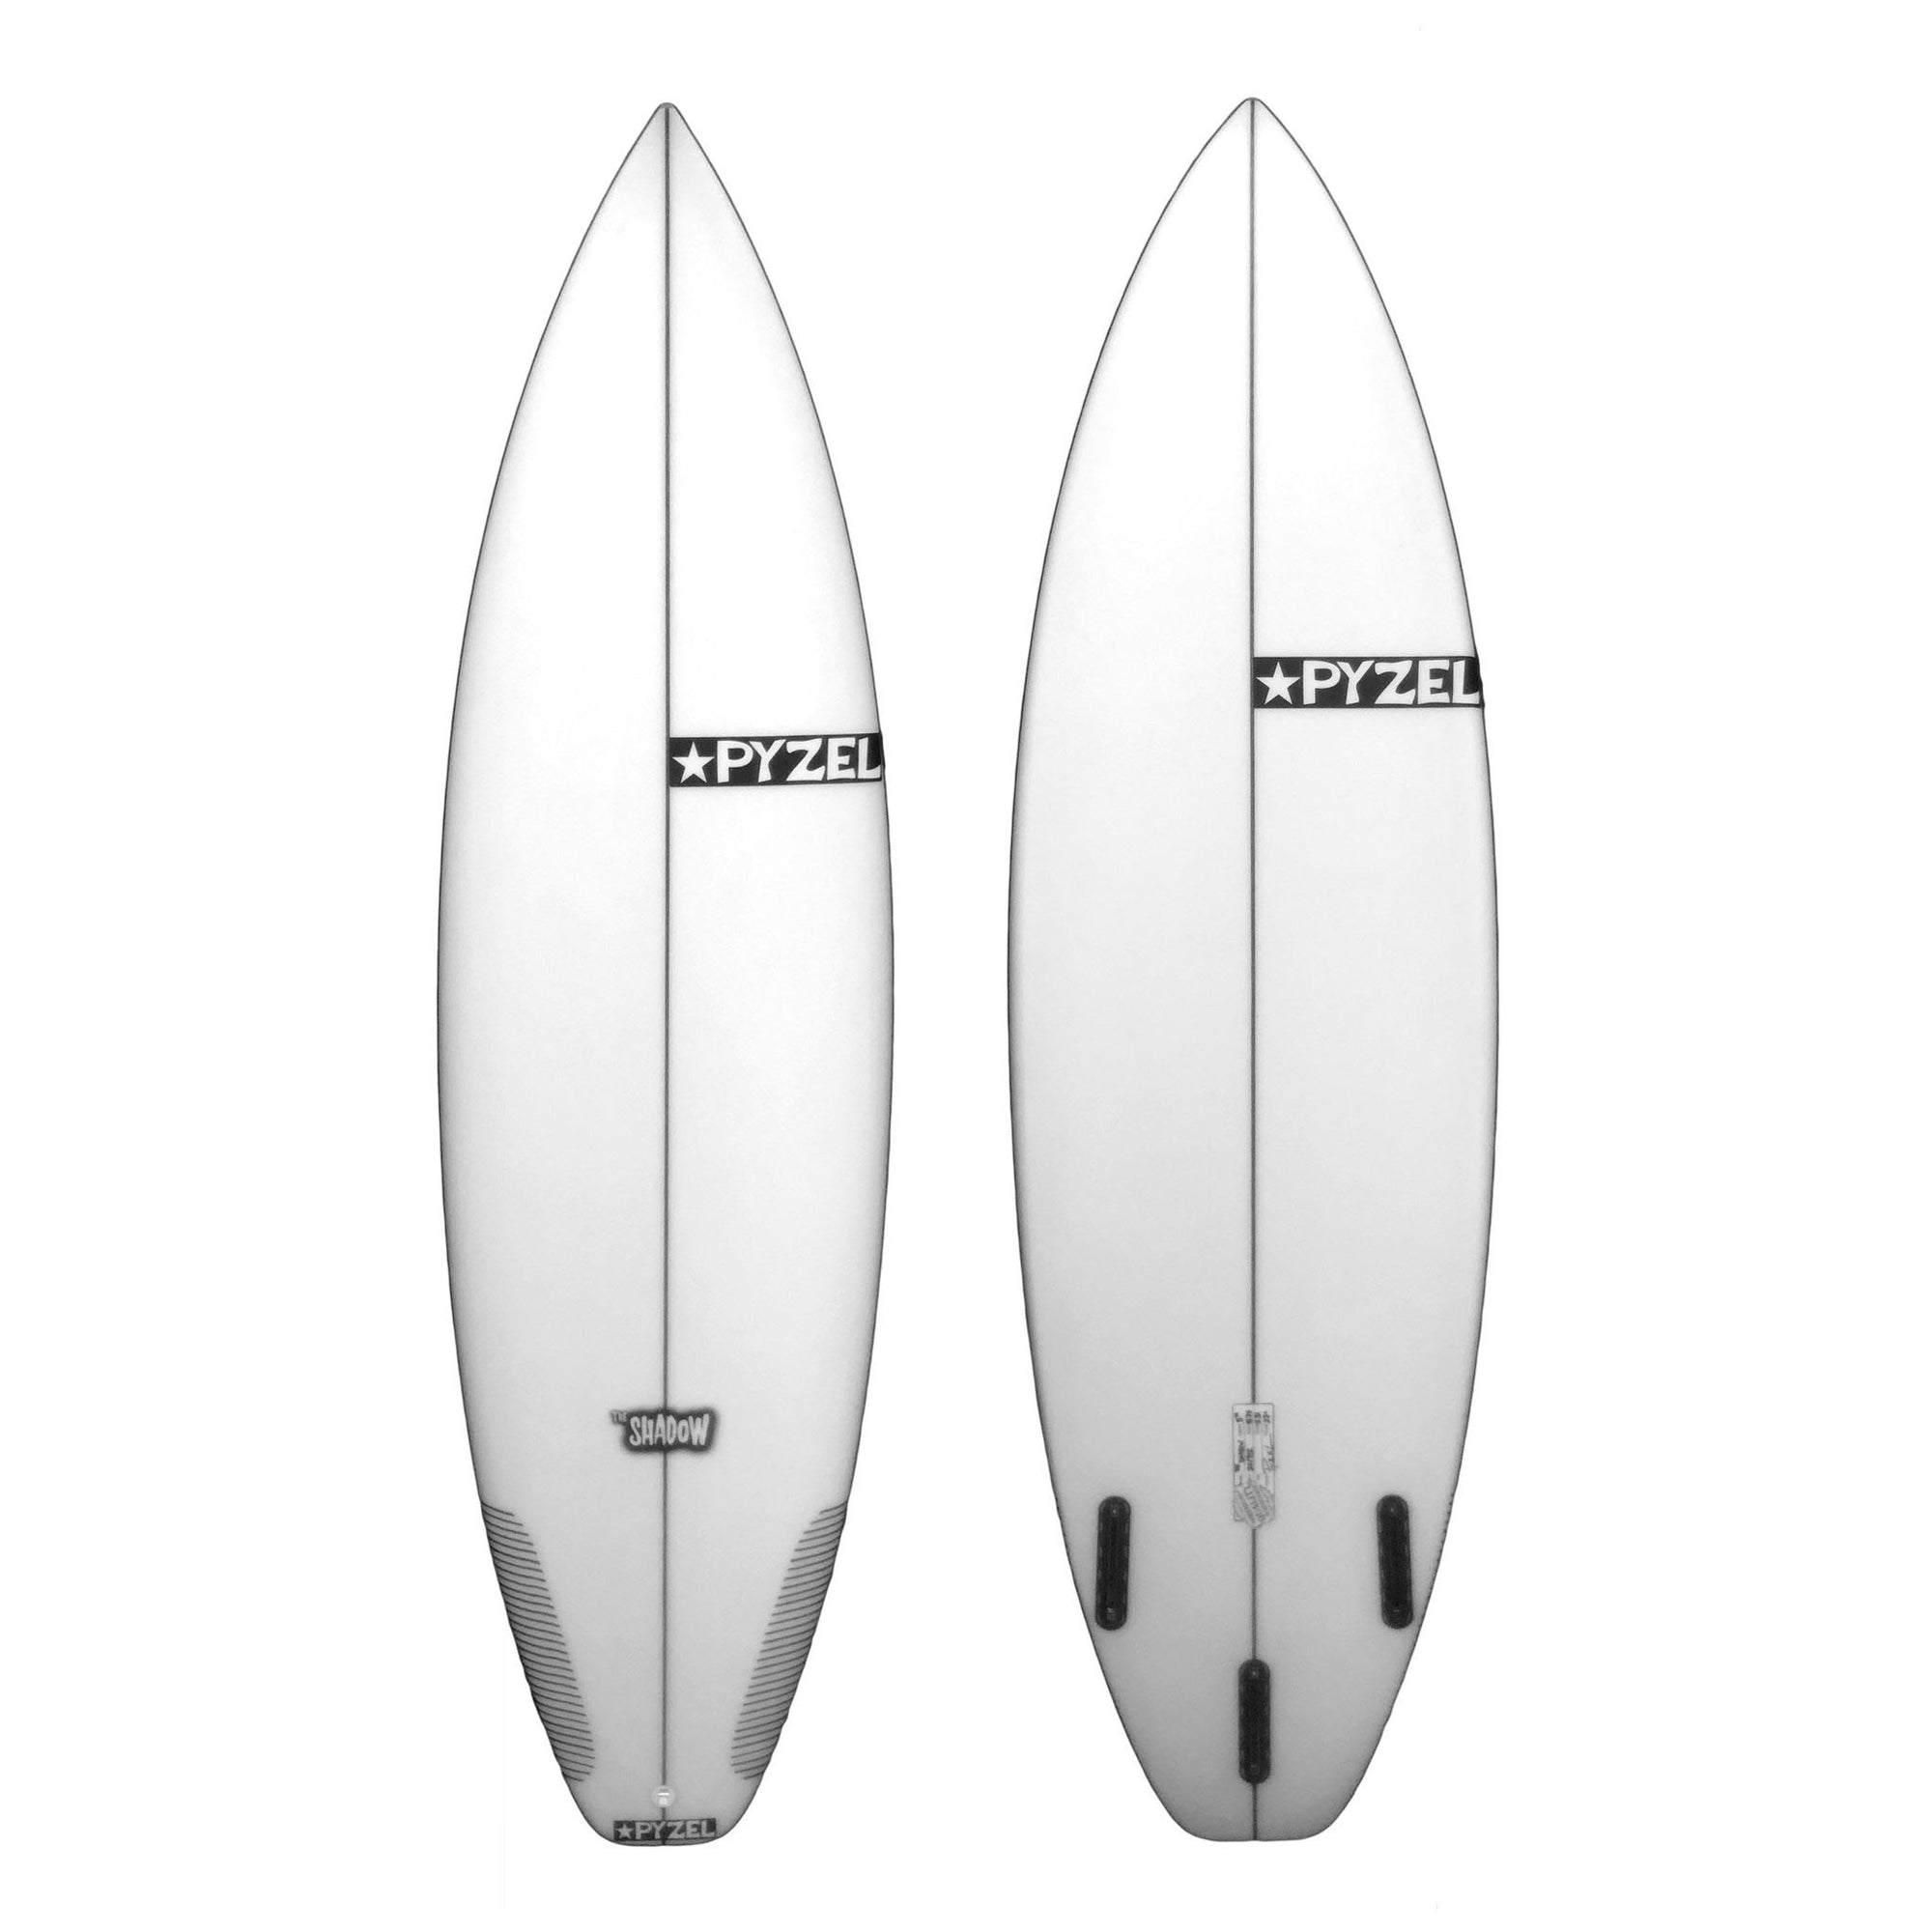 Pyzel Shadow Surfboard